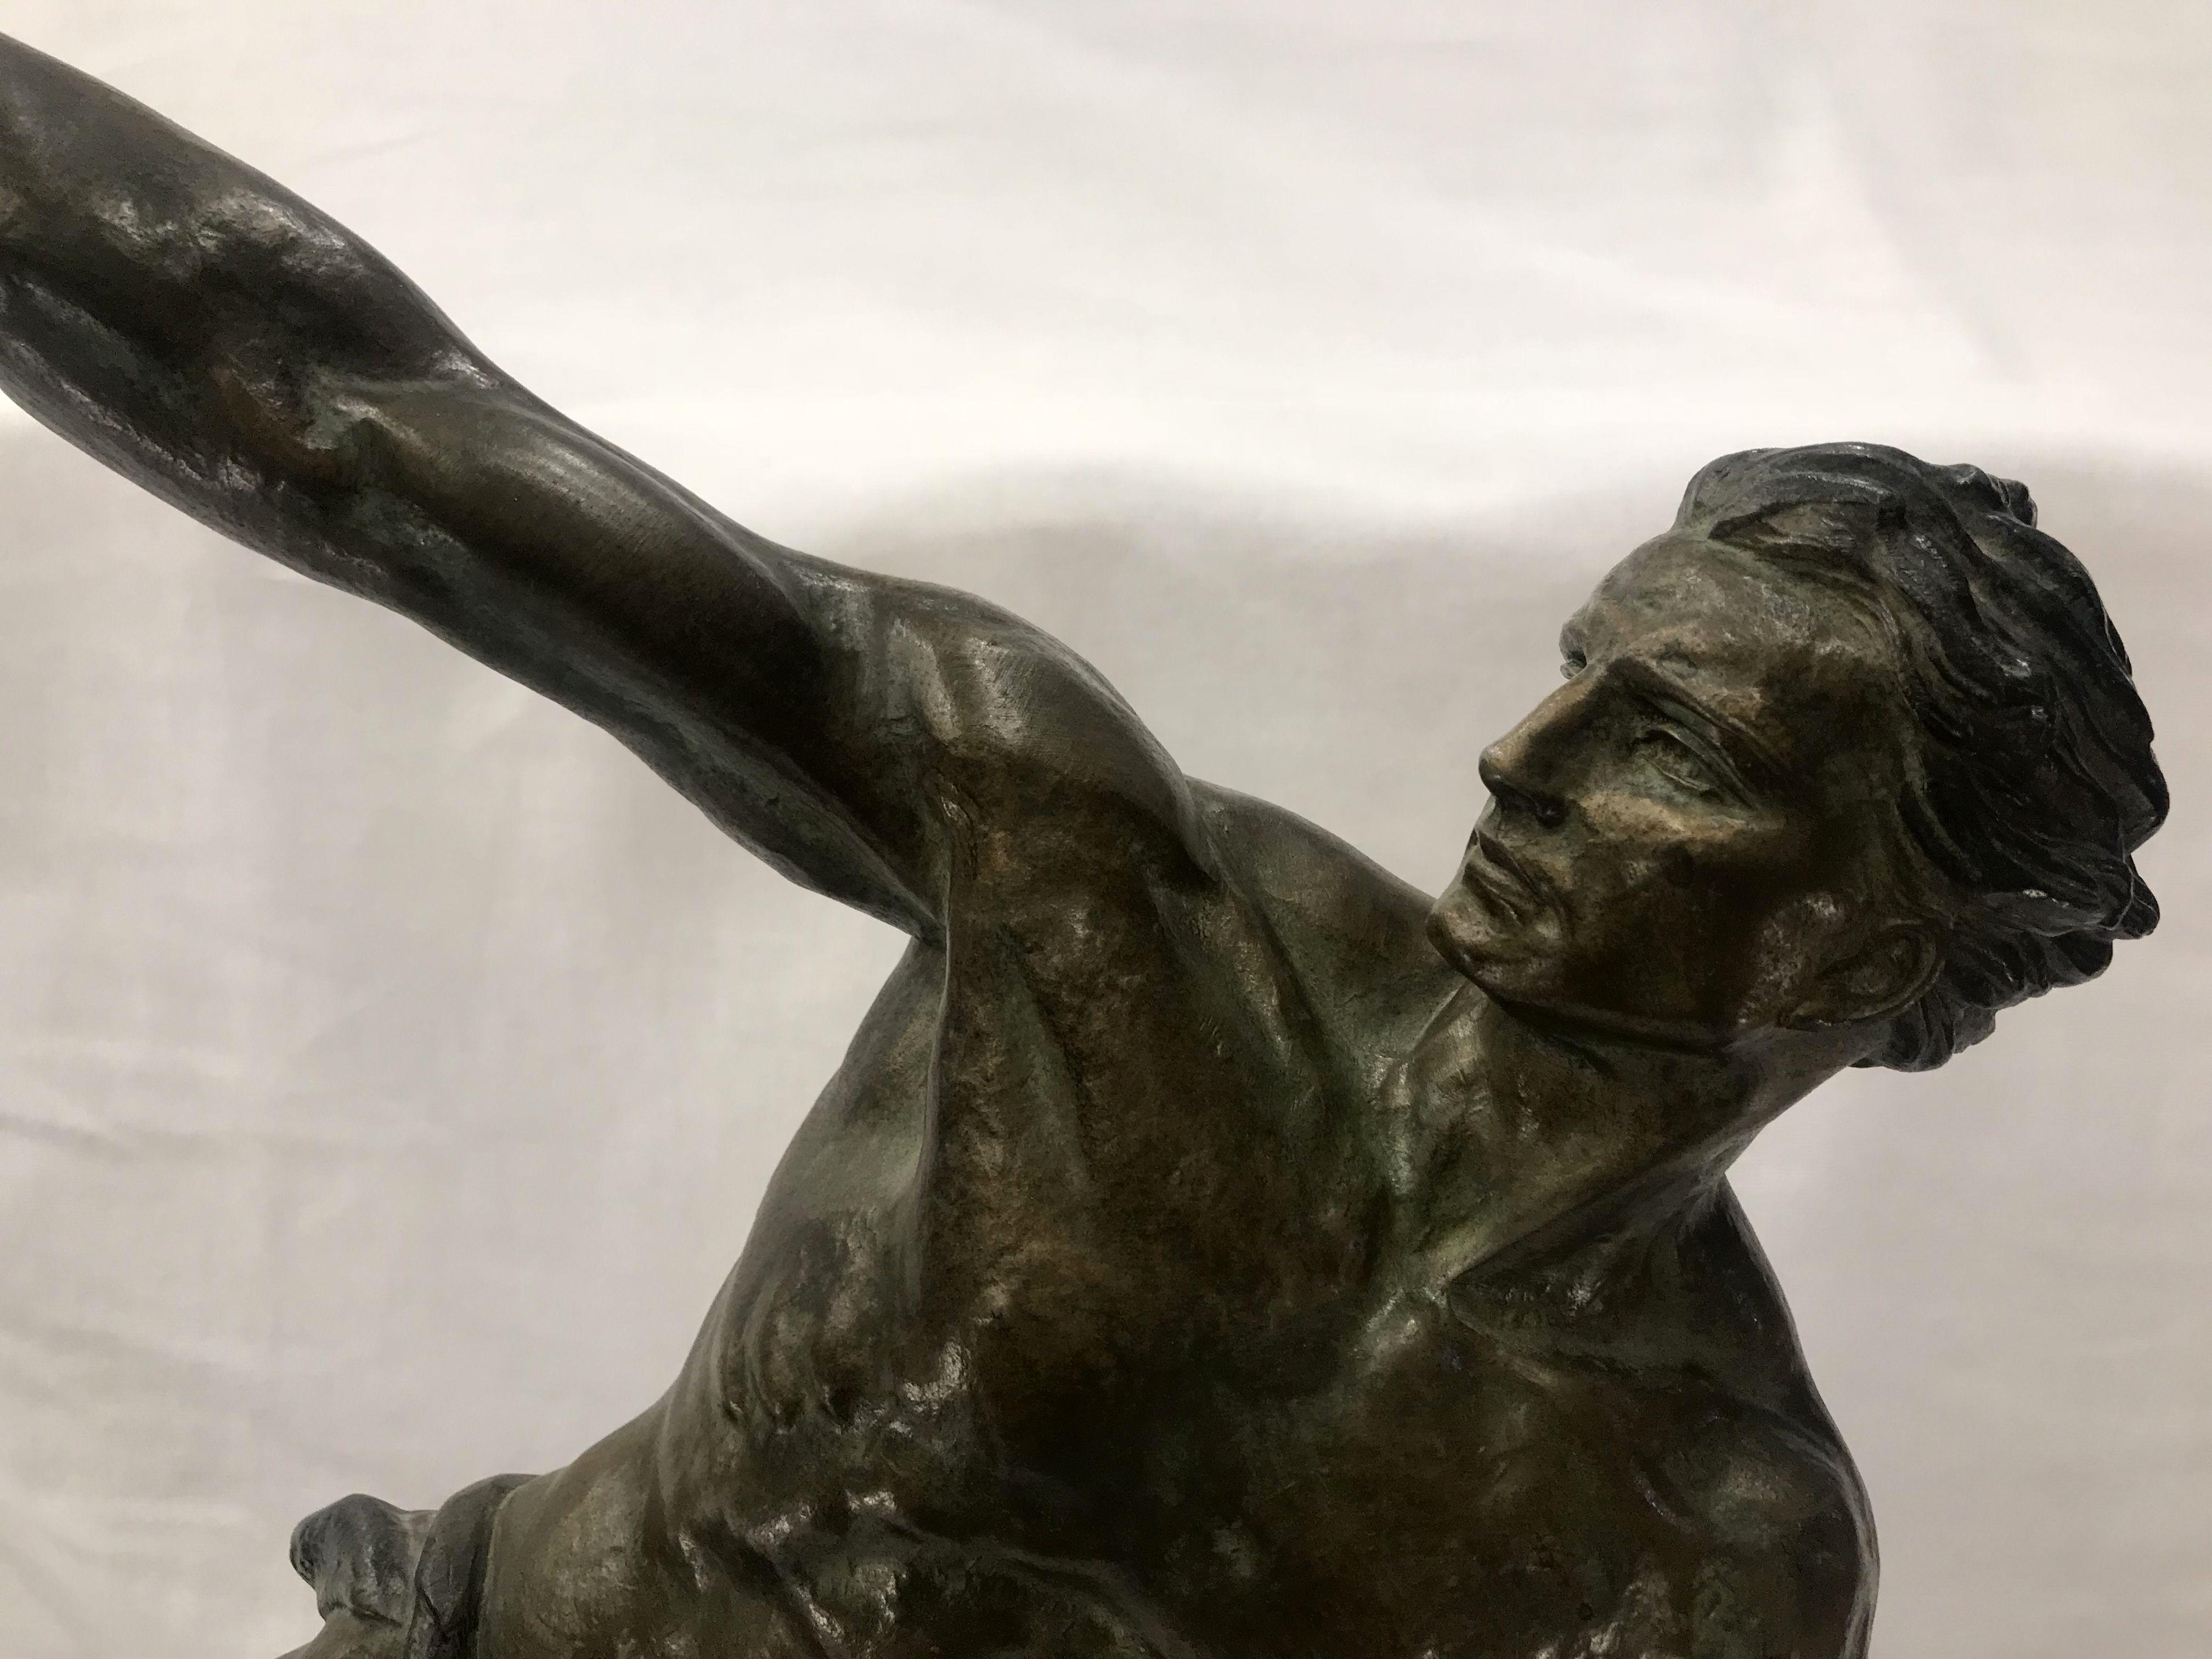 Incredible athletic nude bronze sculpture by Jean de Roncourt. Bronze figure on marble base.